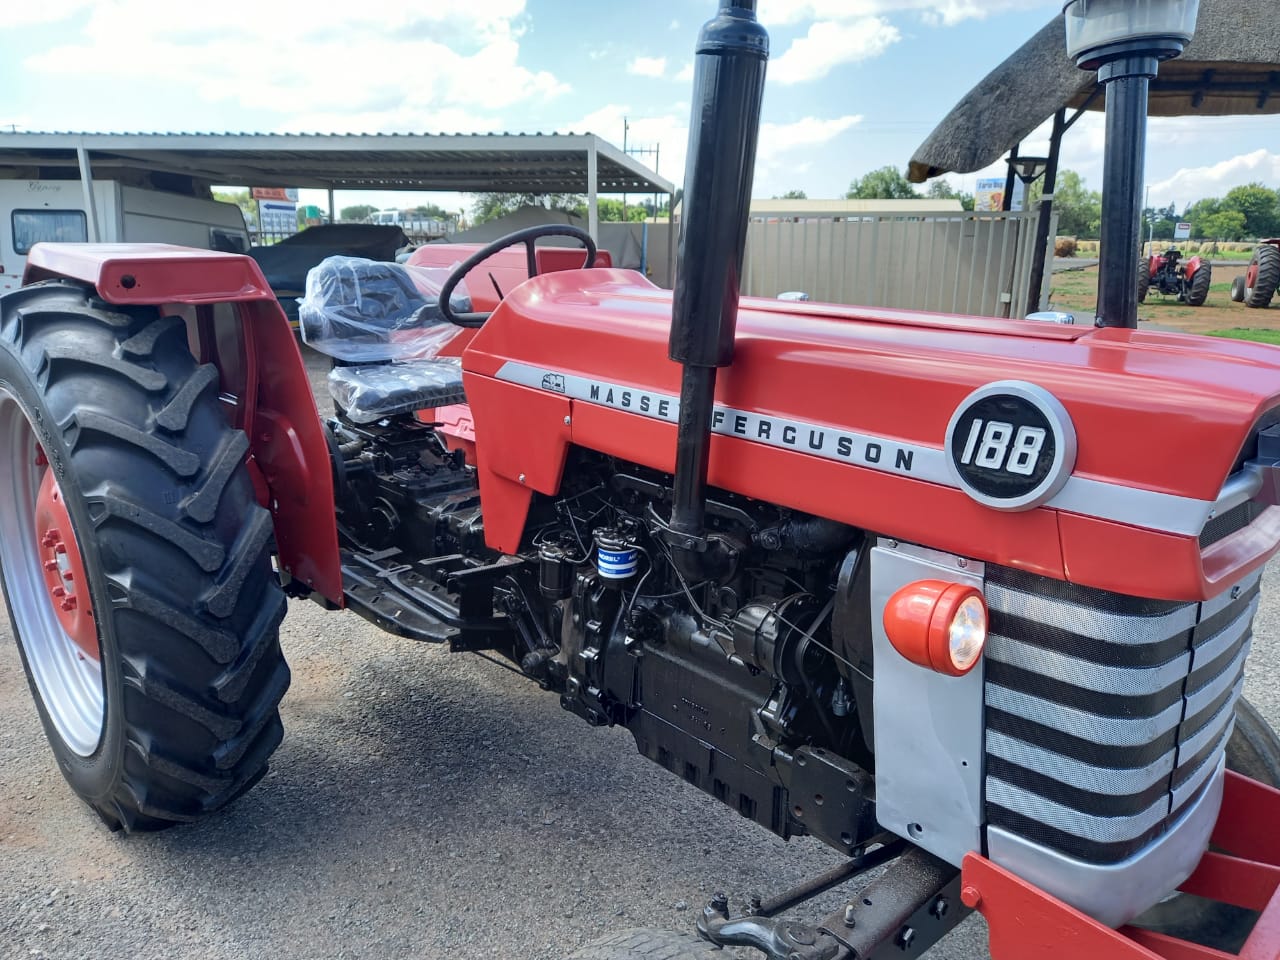 Mf 188 tractor